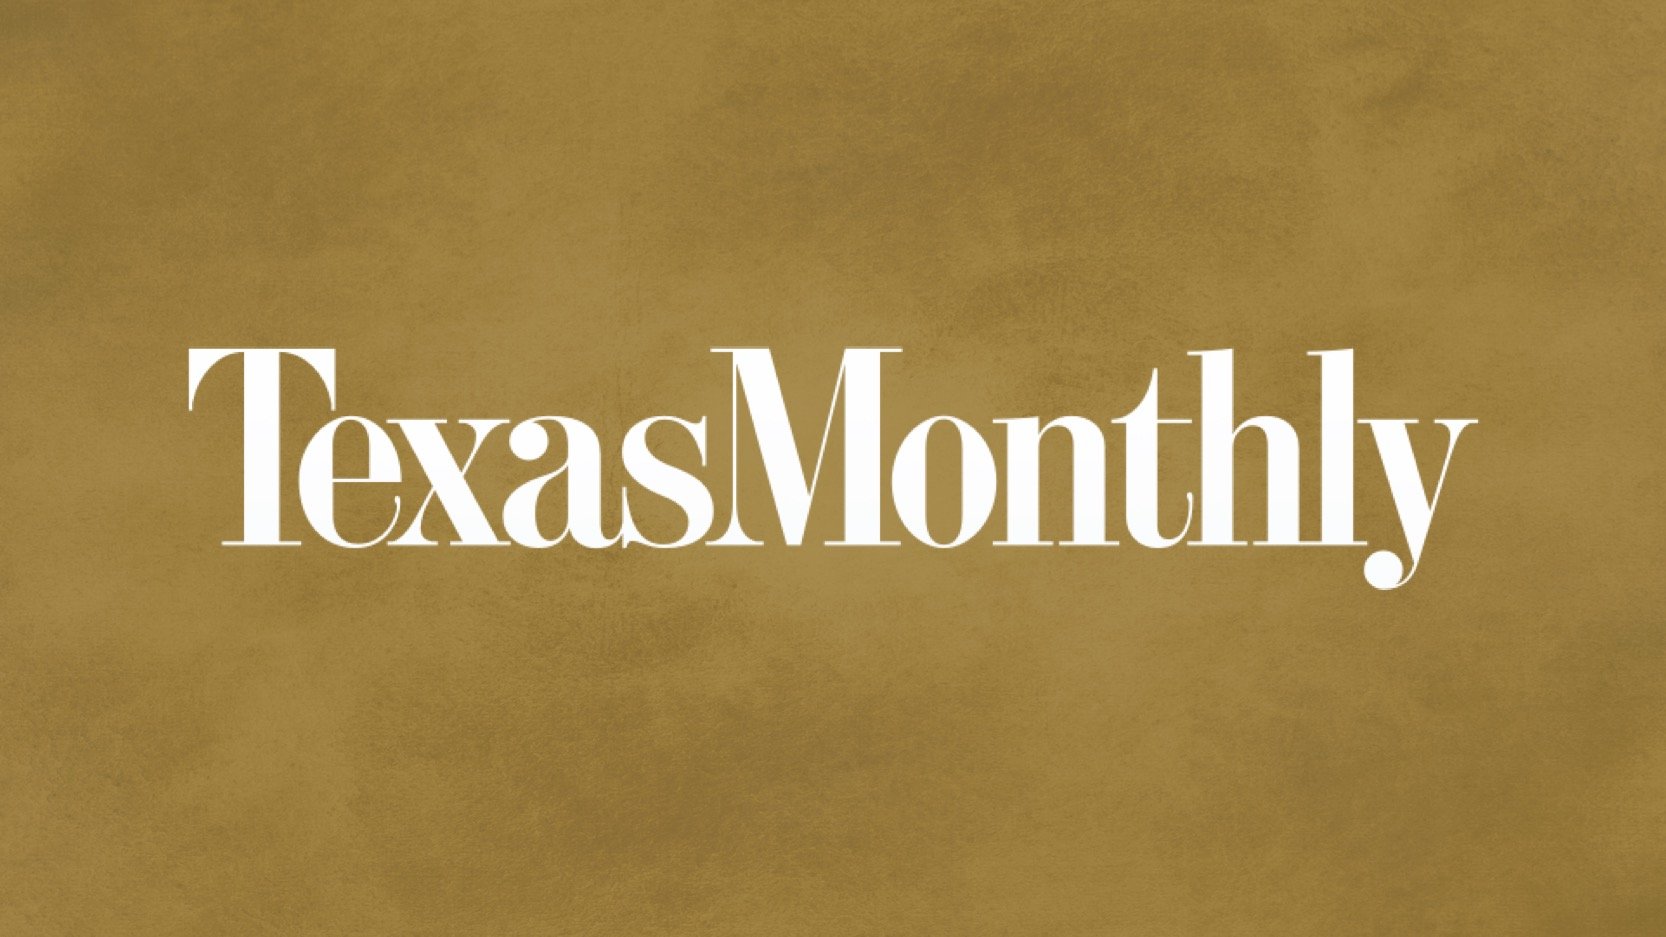 Logo_Card_Texas_Monthly.jpg